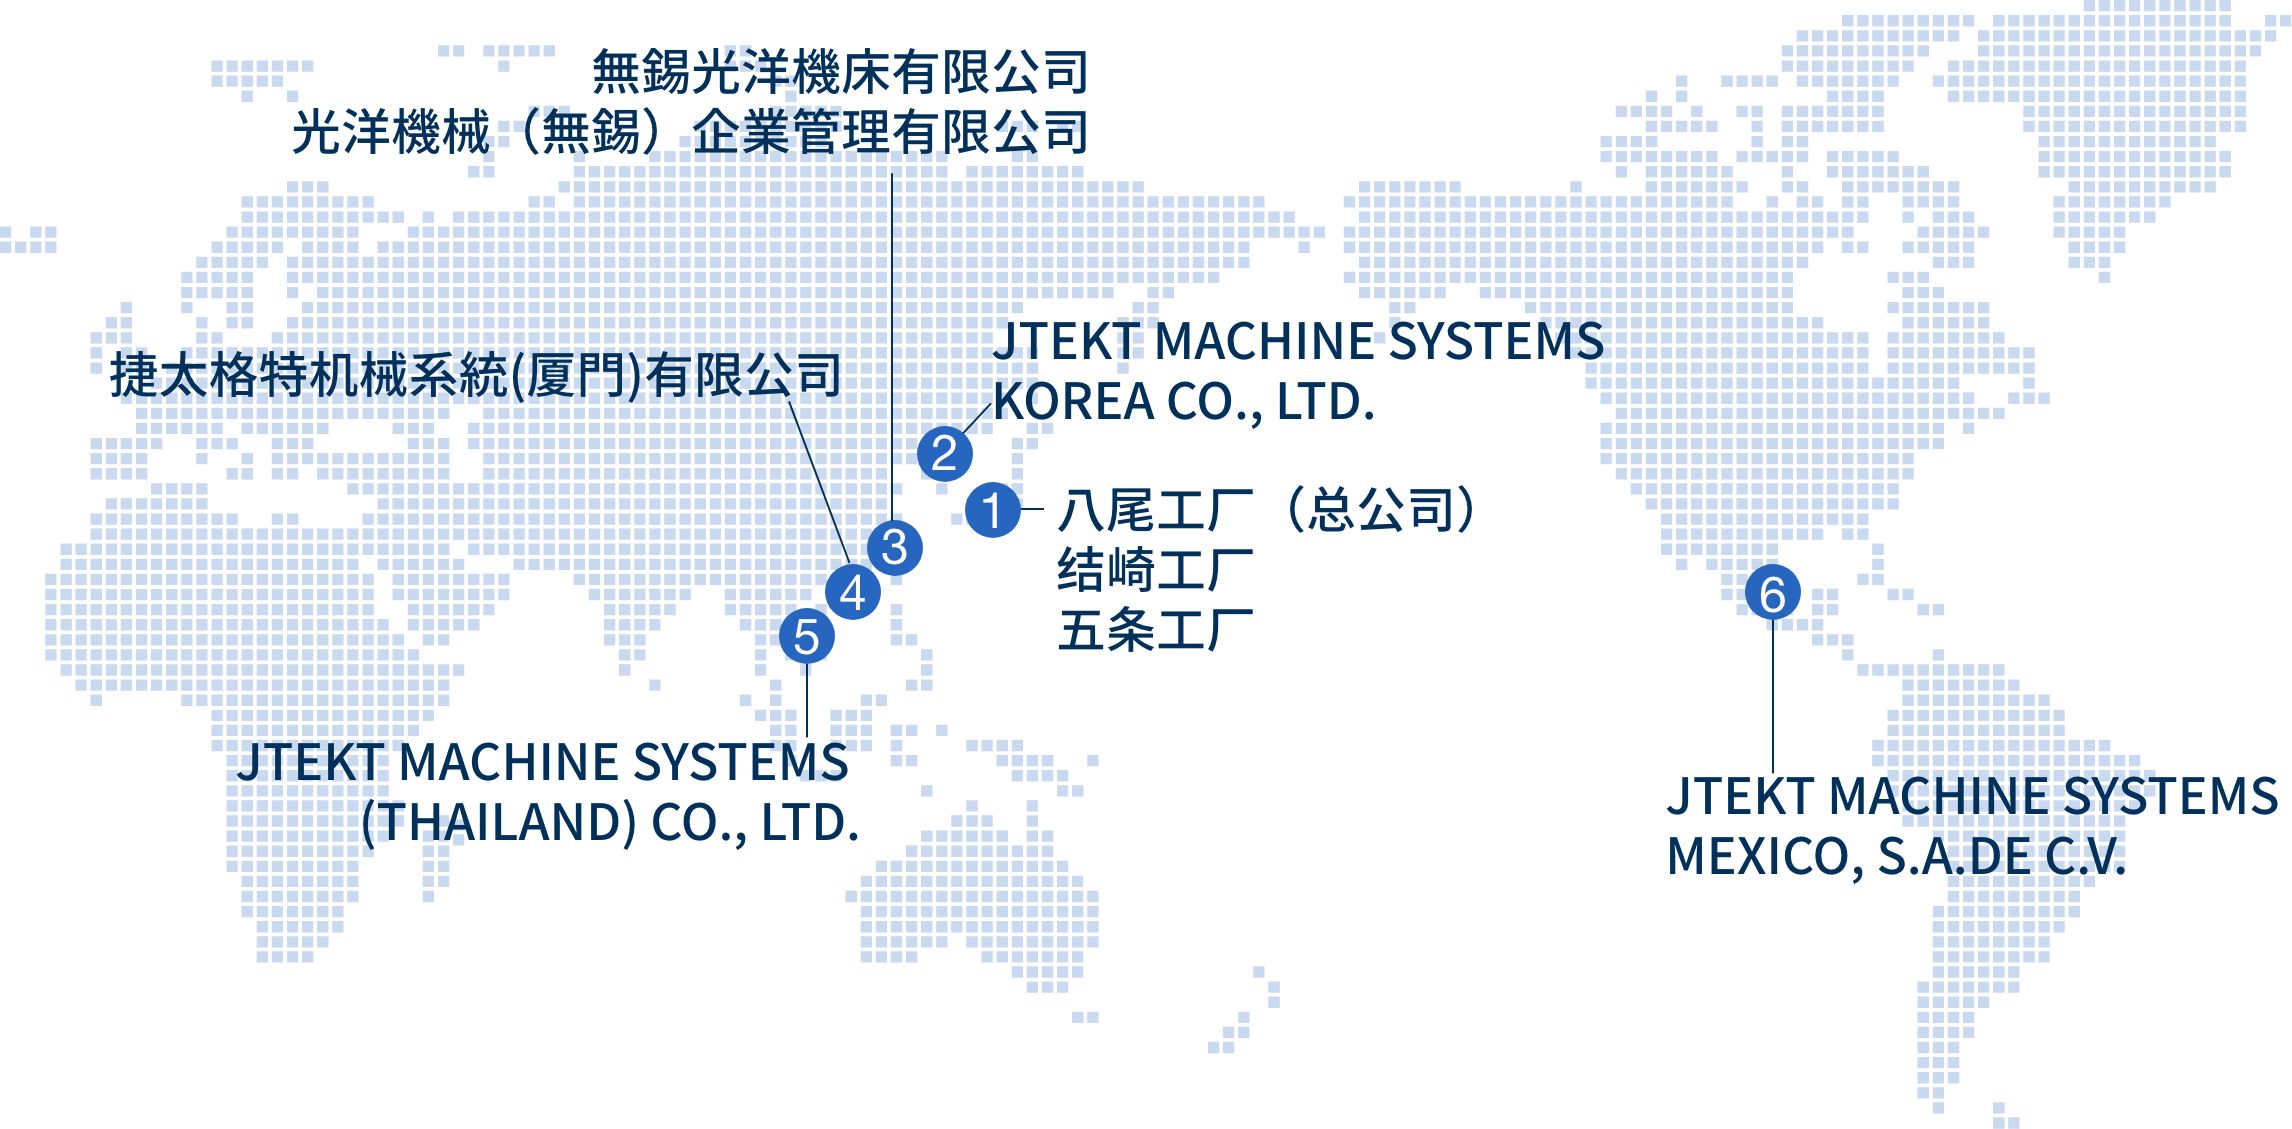 KOYO MACHINE INDUSTRIES CO.,LTD. 生产基地/关联公司